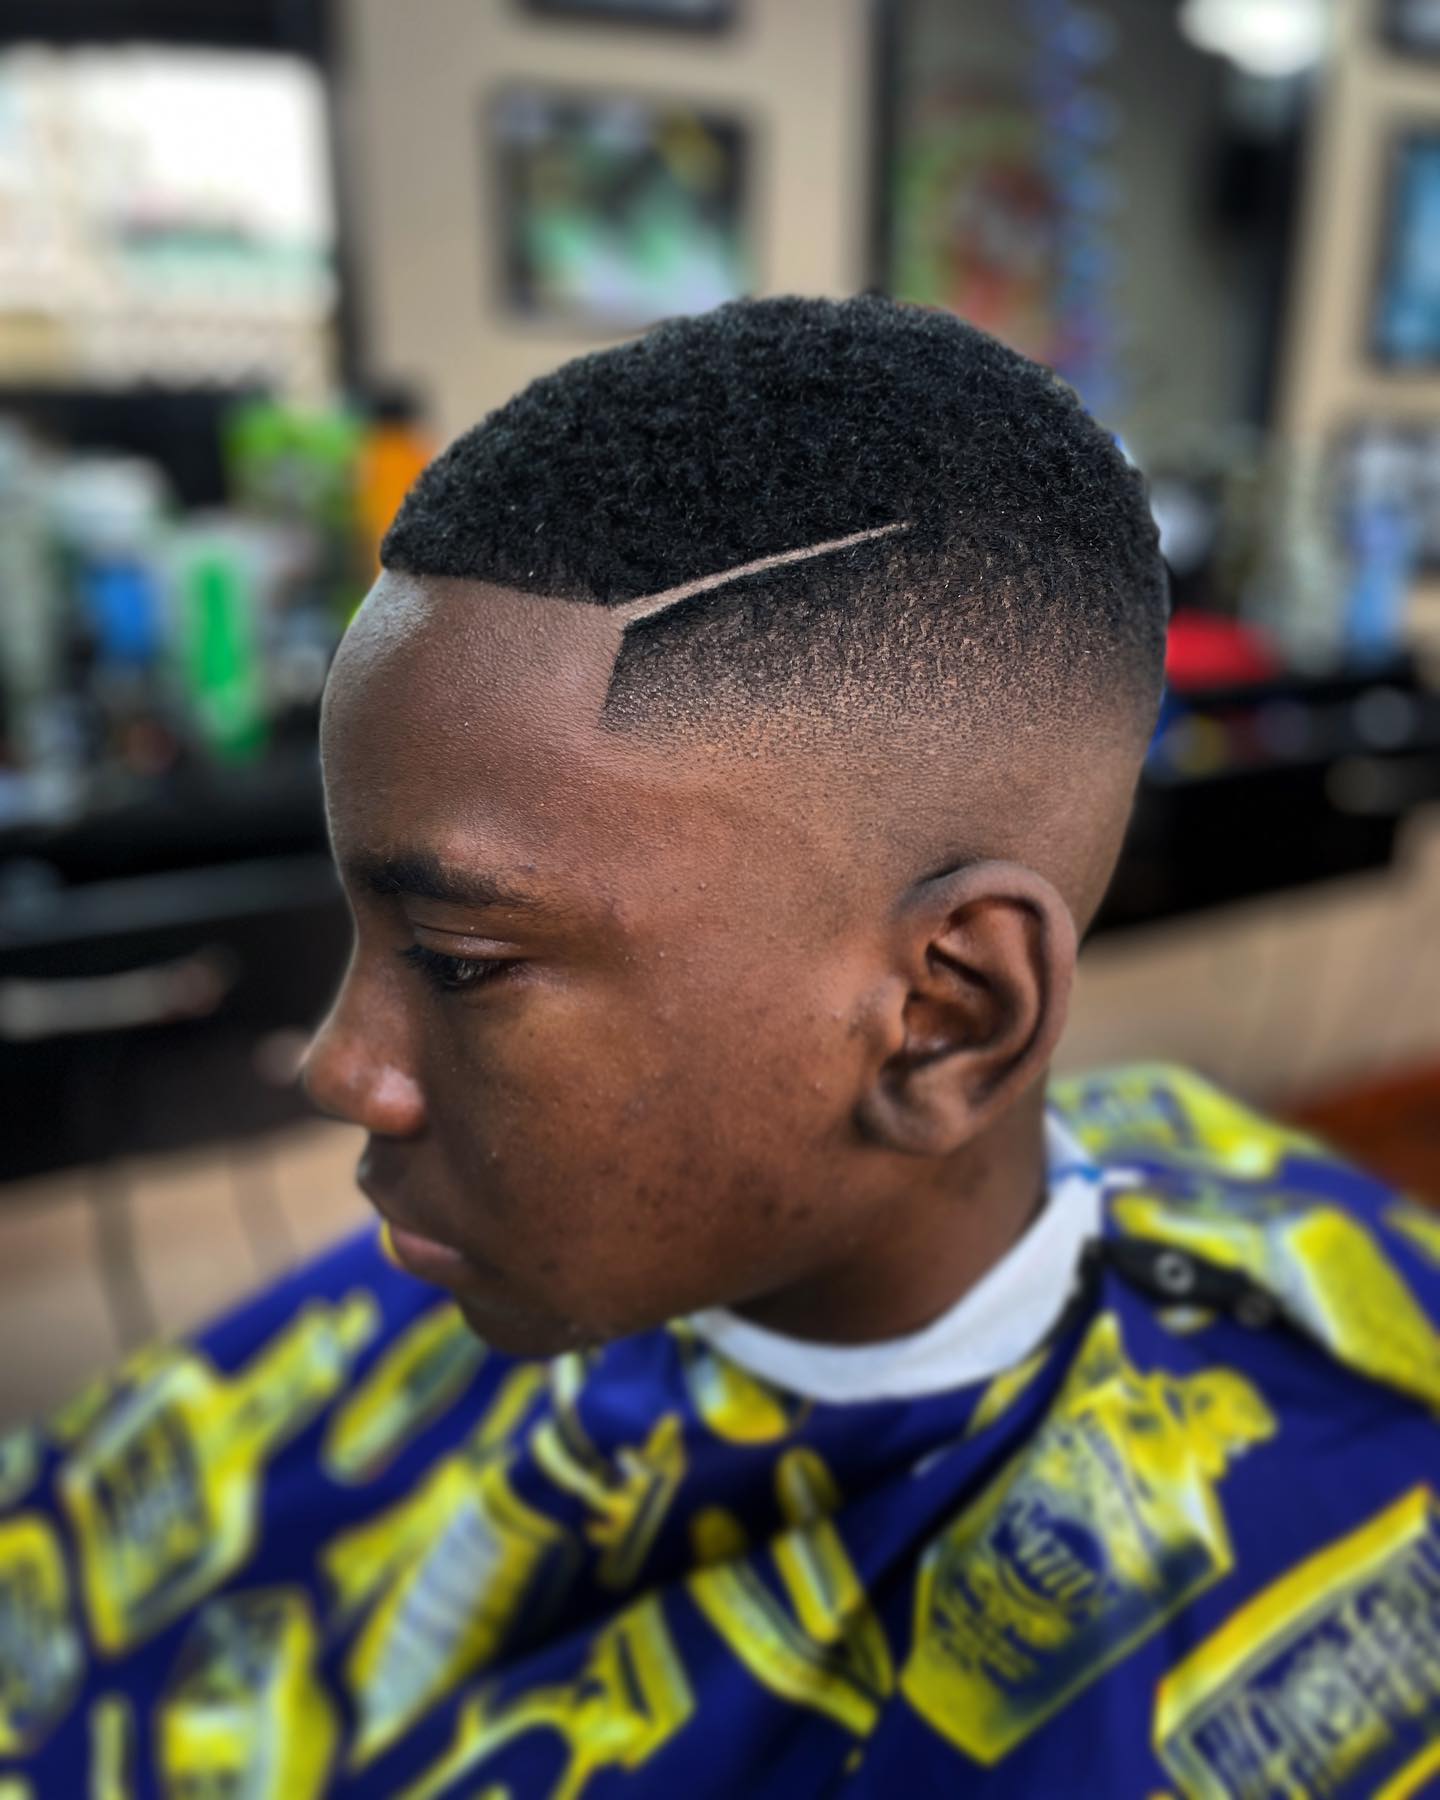 Fade Cut 335 Best fade haircut | Fade haircut Black | Fade haircut for Men Fade Cut Hairstyles for Men